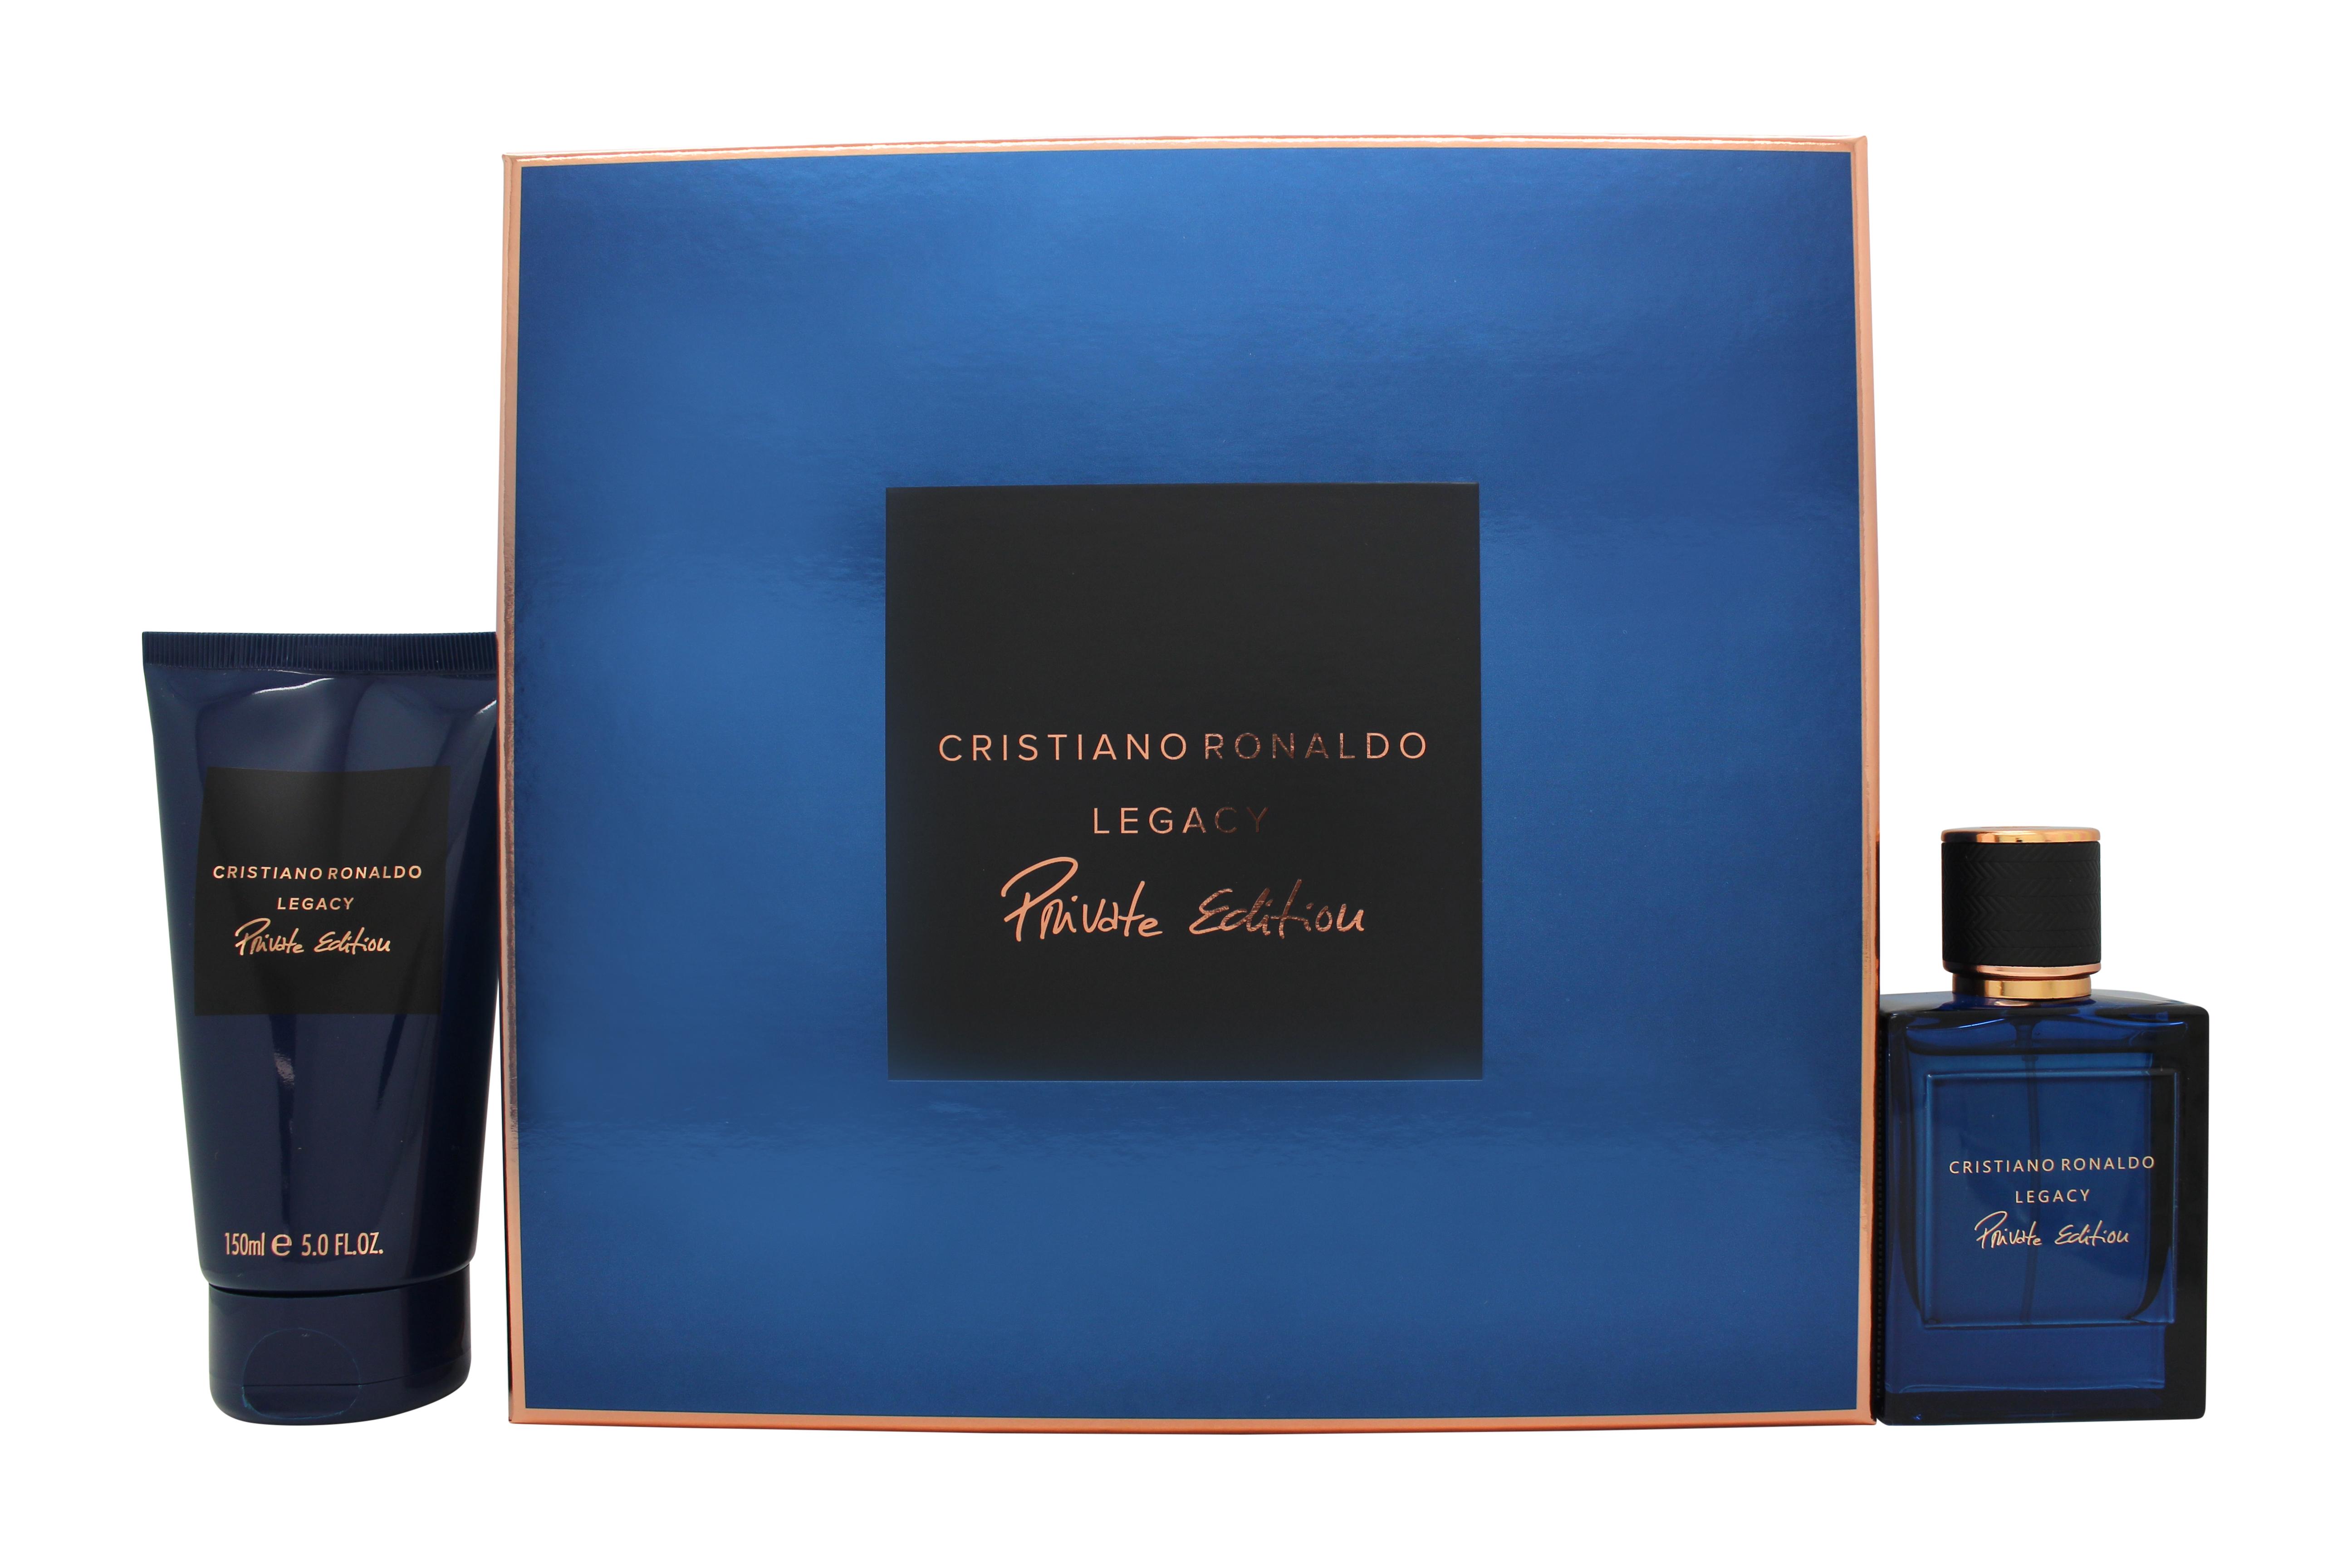 Cristiano Ronaldo Legacy Private Edition Gift Set 50ml EDP + 150ml Shower Gel